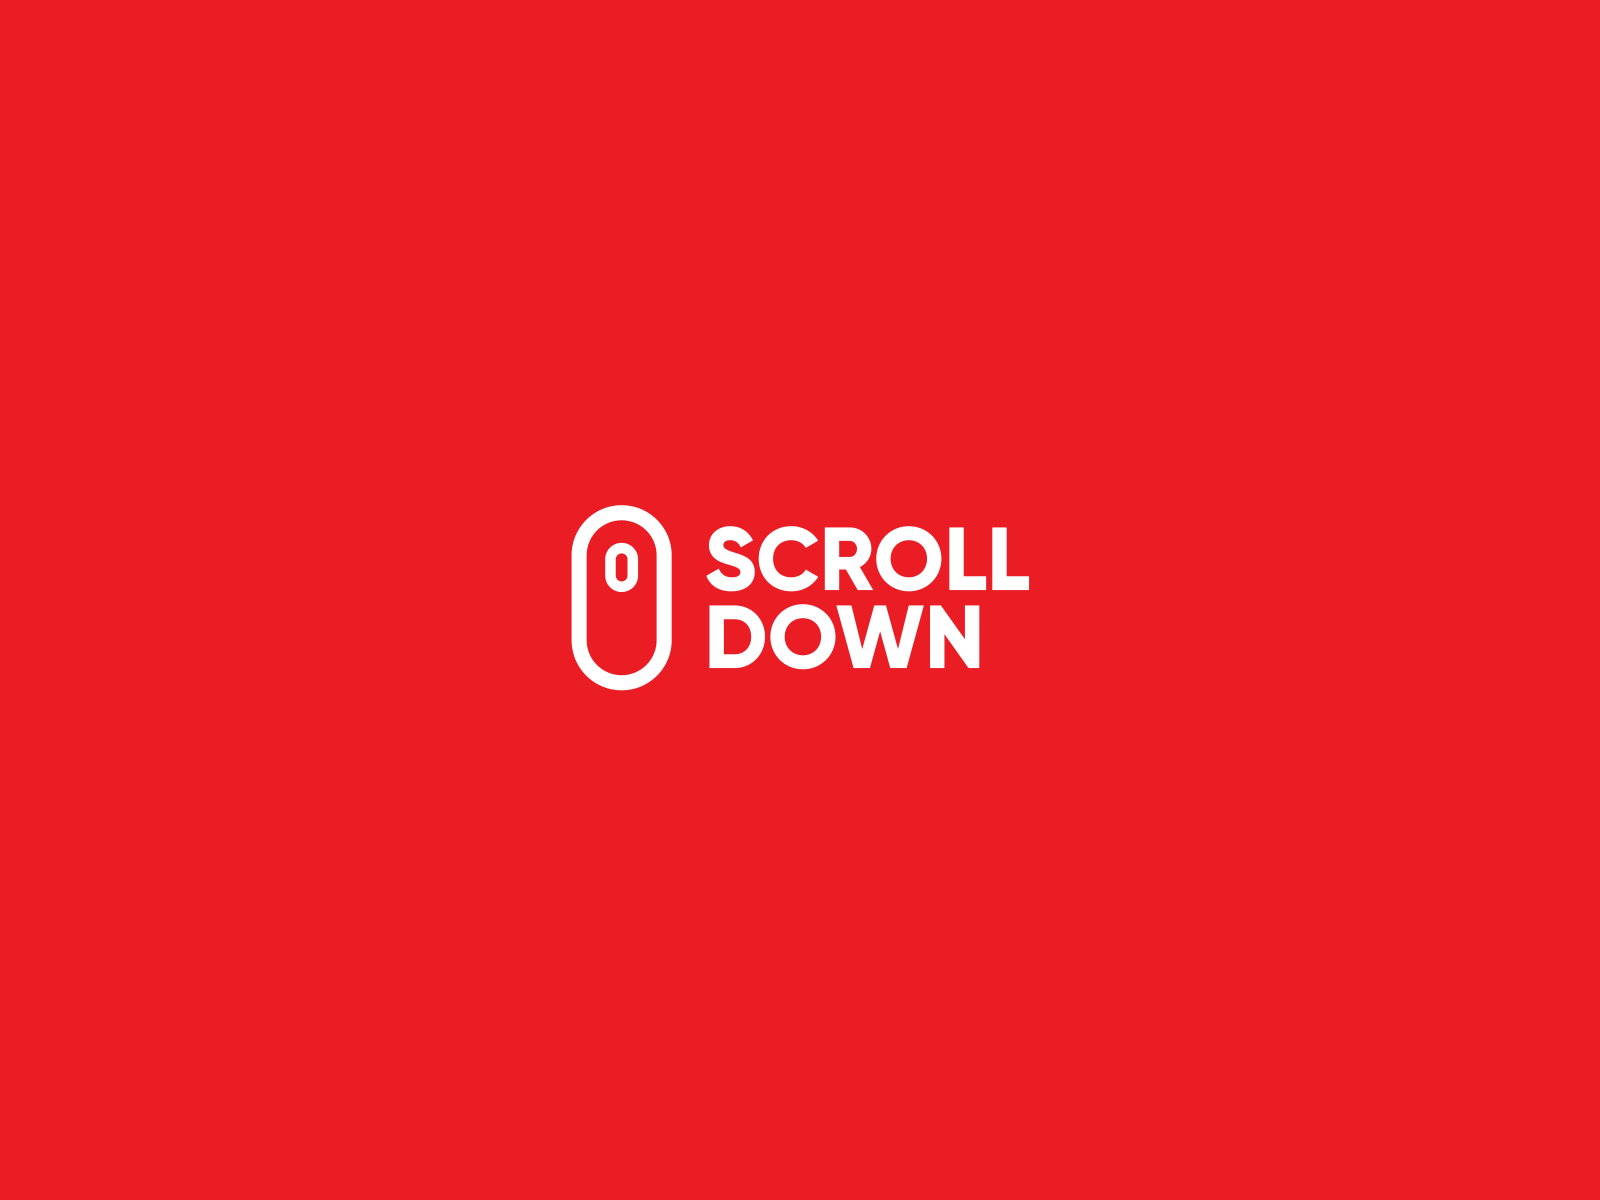 Scrolldown logo animation animation logo logo animation mouse scroll scrolldown